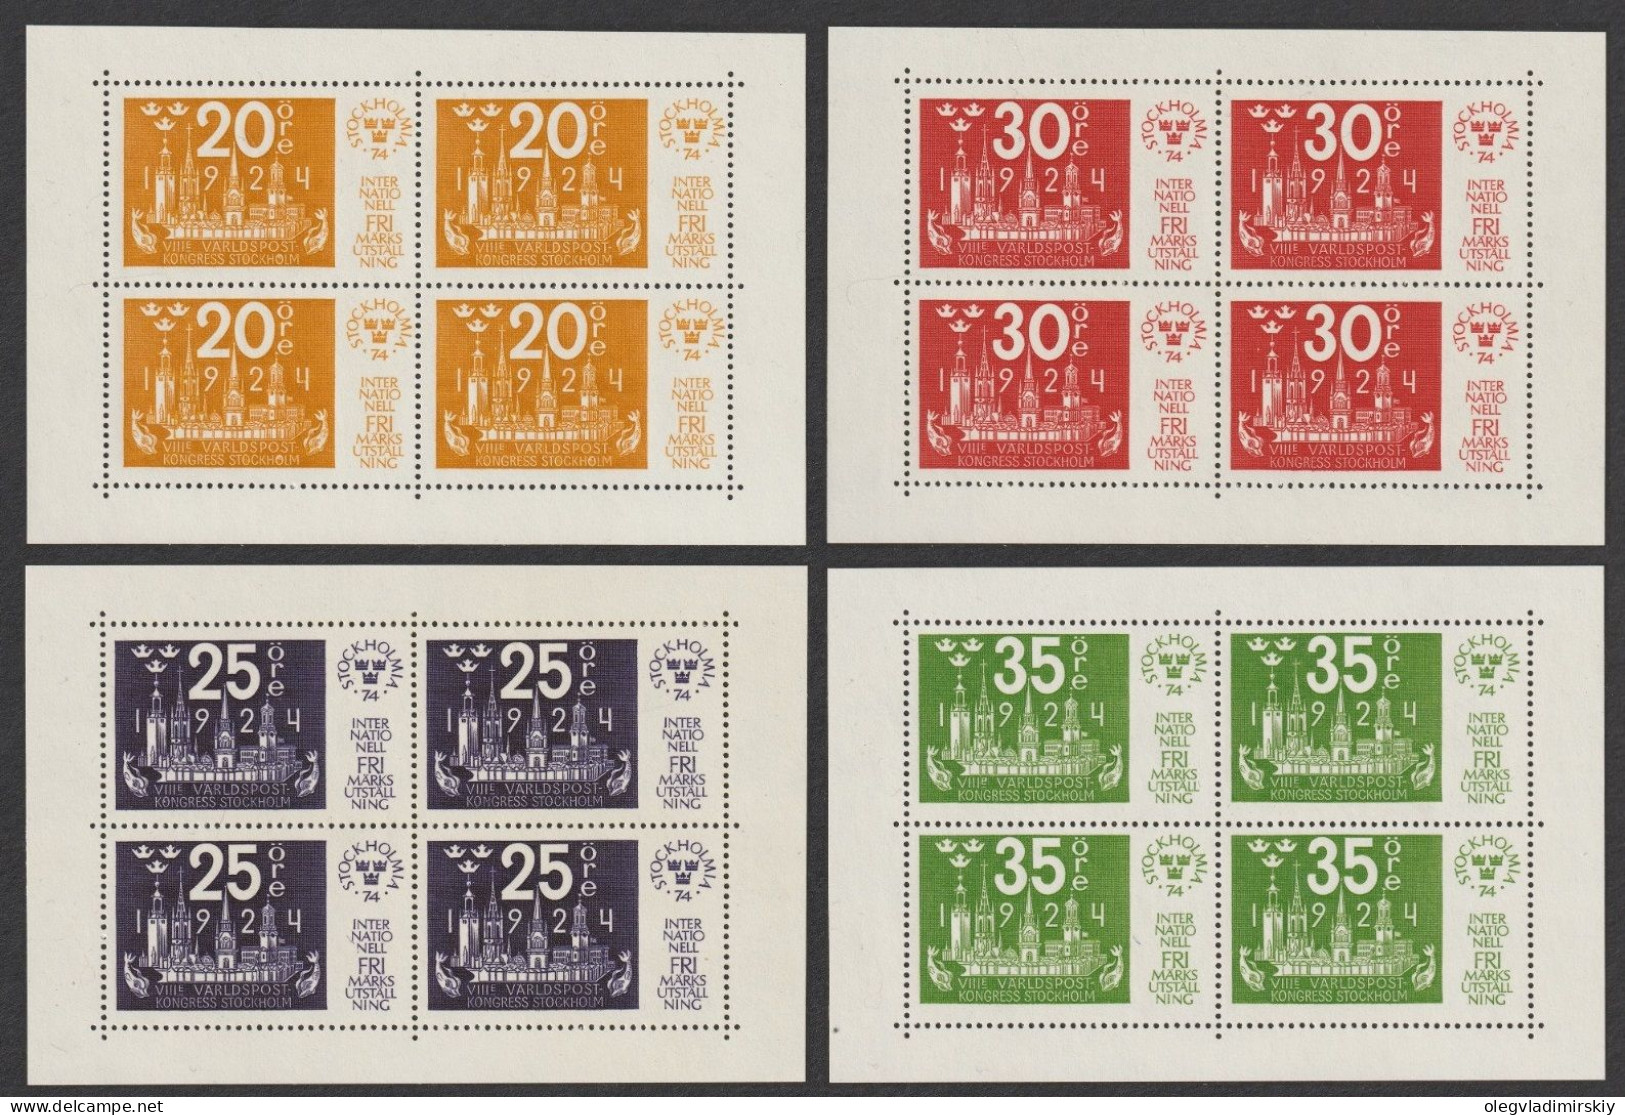 Sweden Suède Suède 1974 STOCKHOLMIA 74 International Stamp Exhibition Set Of 4 Miniature Sheets MNH - Blocchi & Foglietti